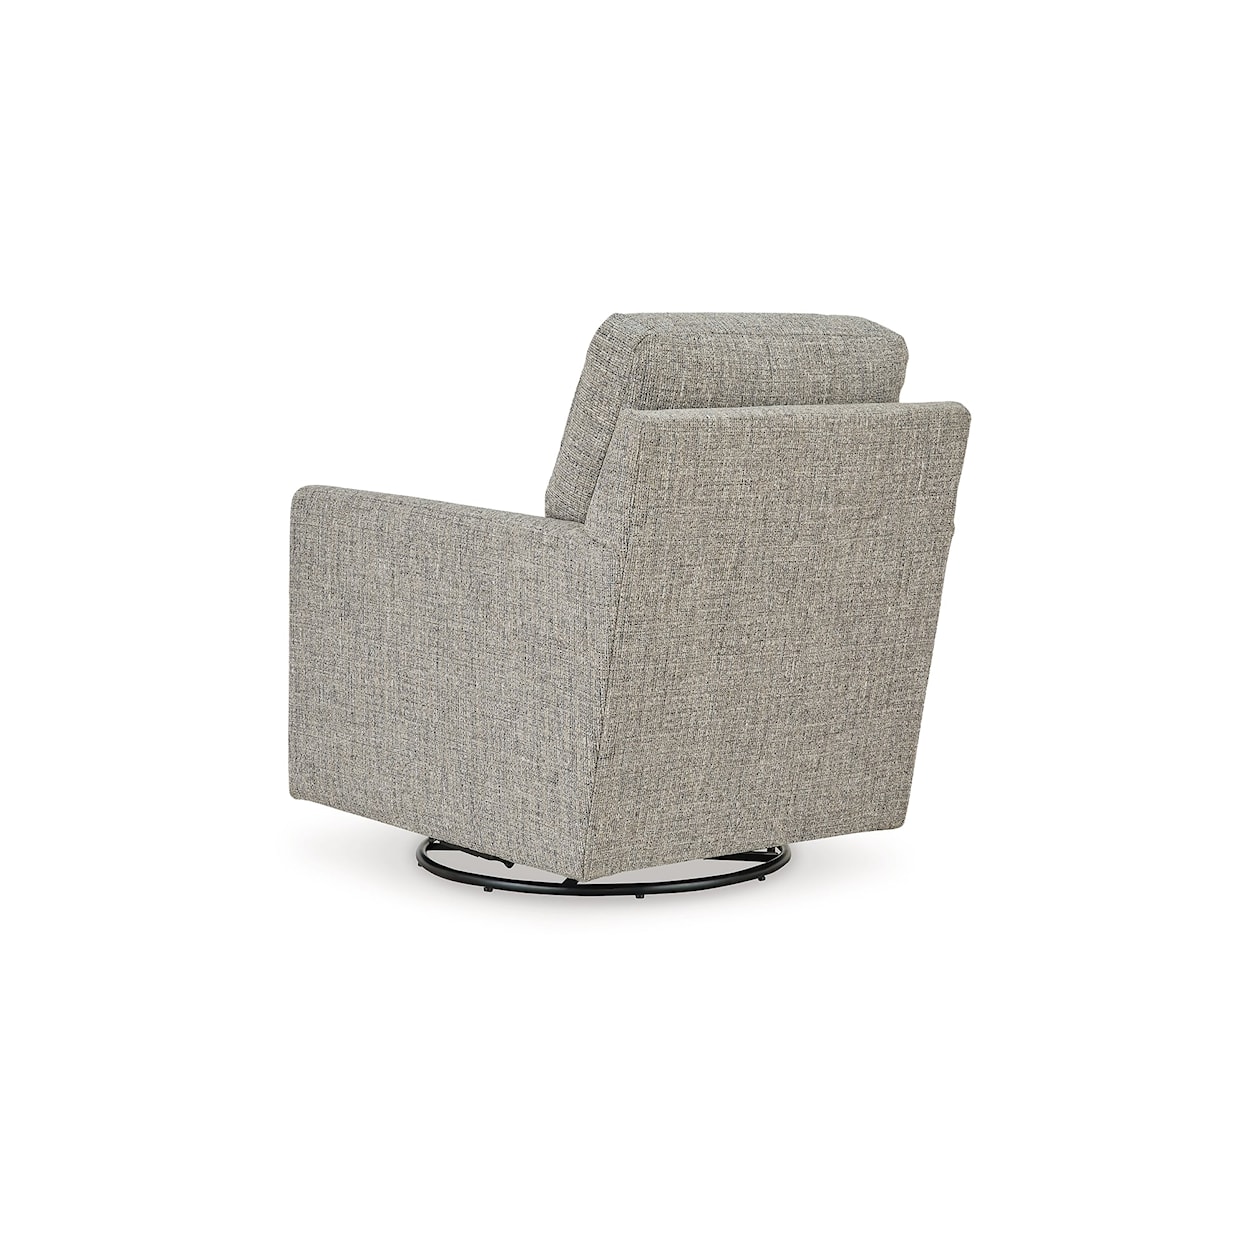 Ashley Furniture Bralynn Swivel Glider Accent Chair